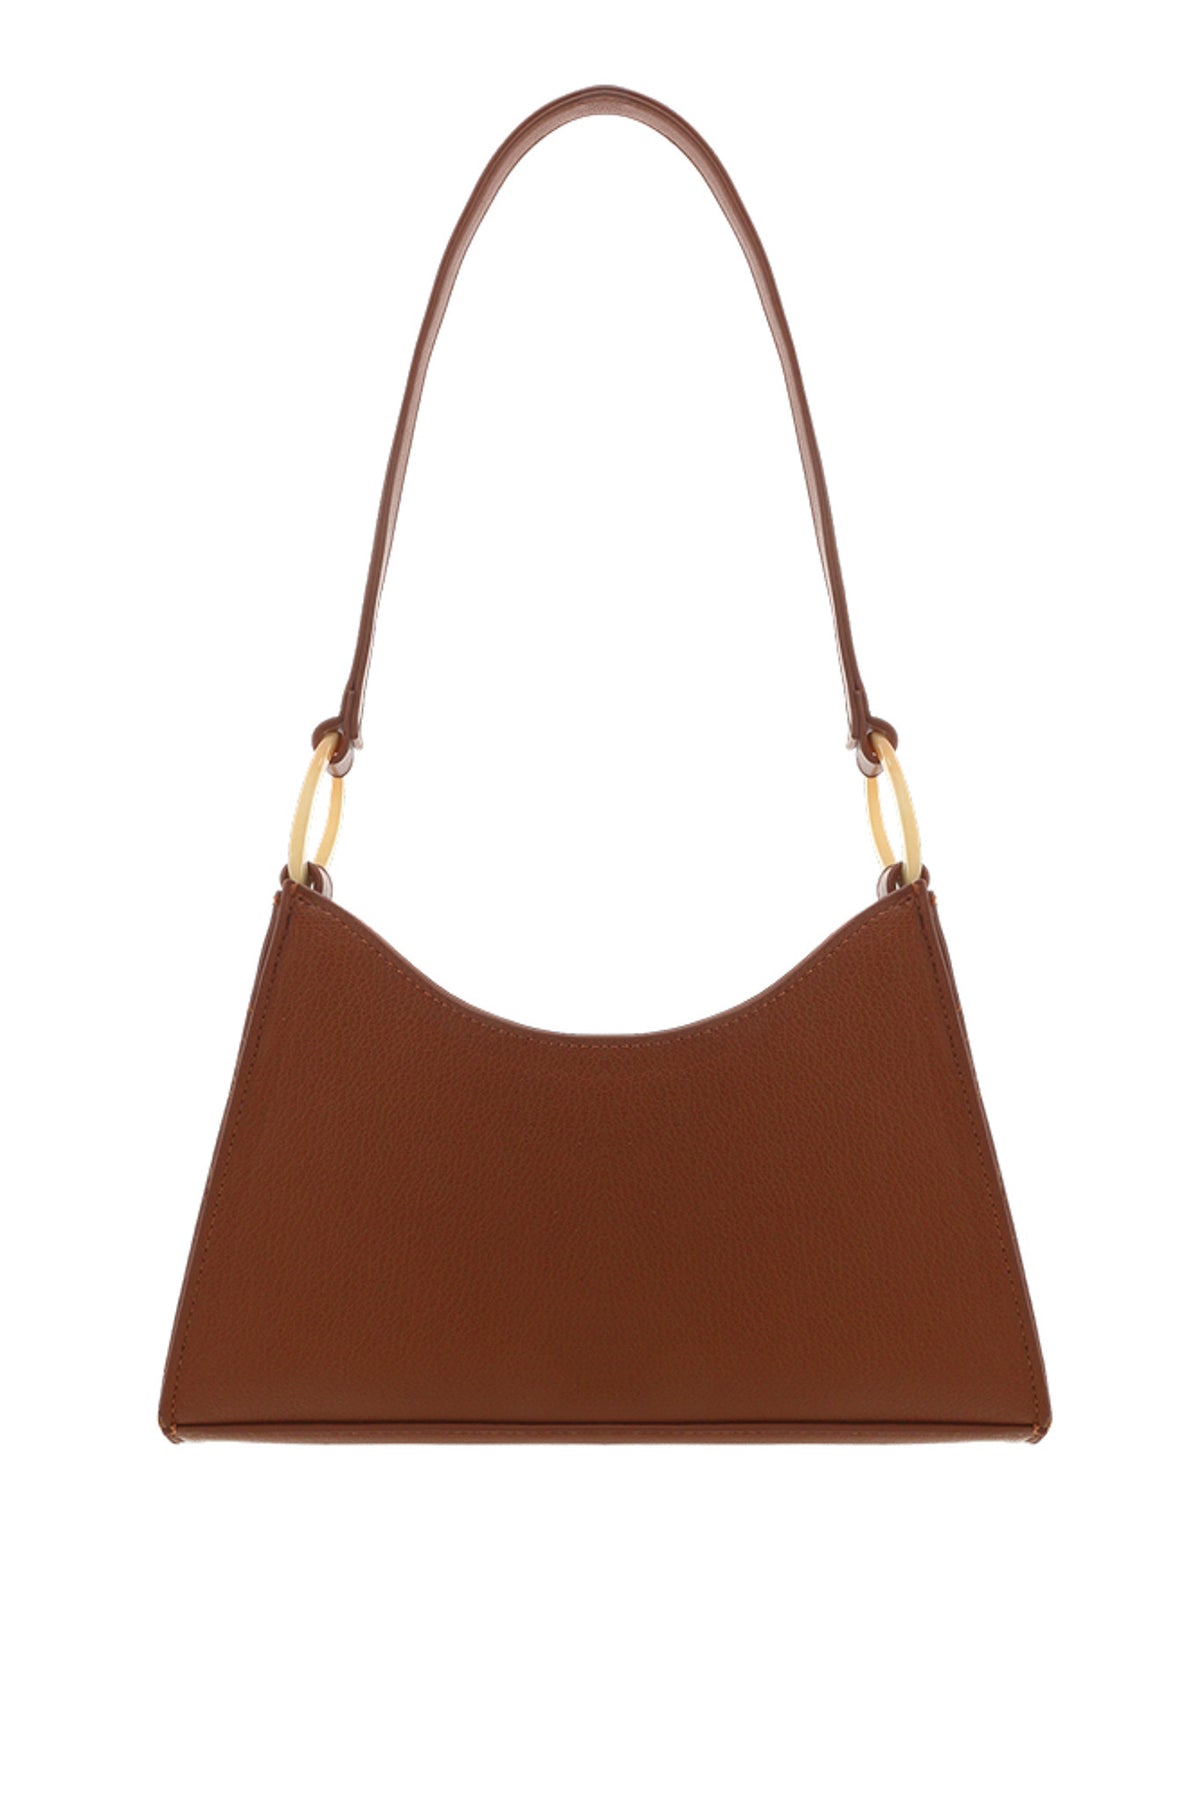 2 pc set  Studded handbag, Linen handbags, Tan shoulder bag